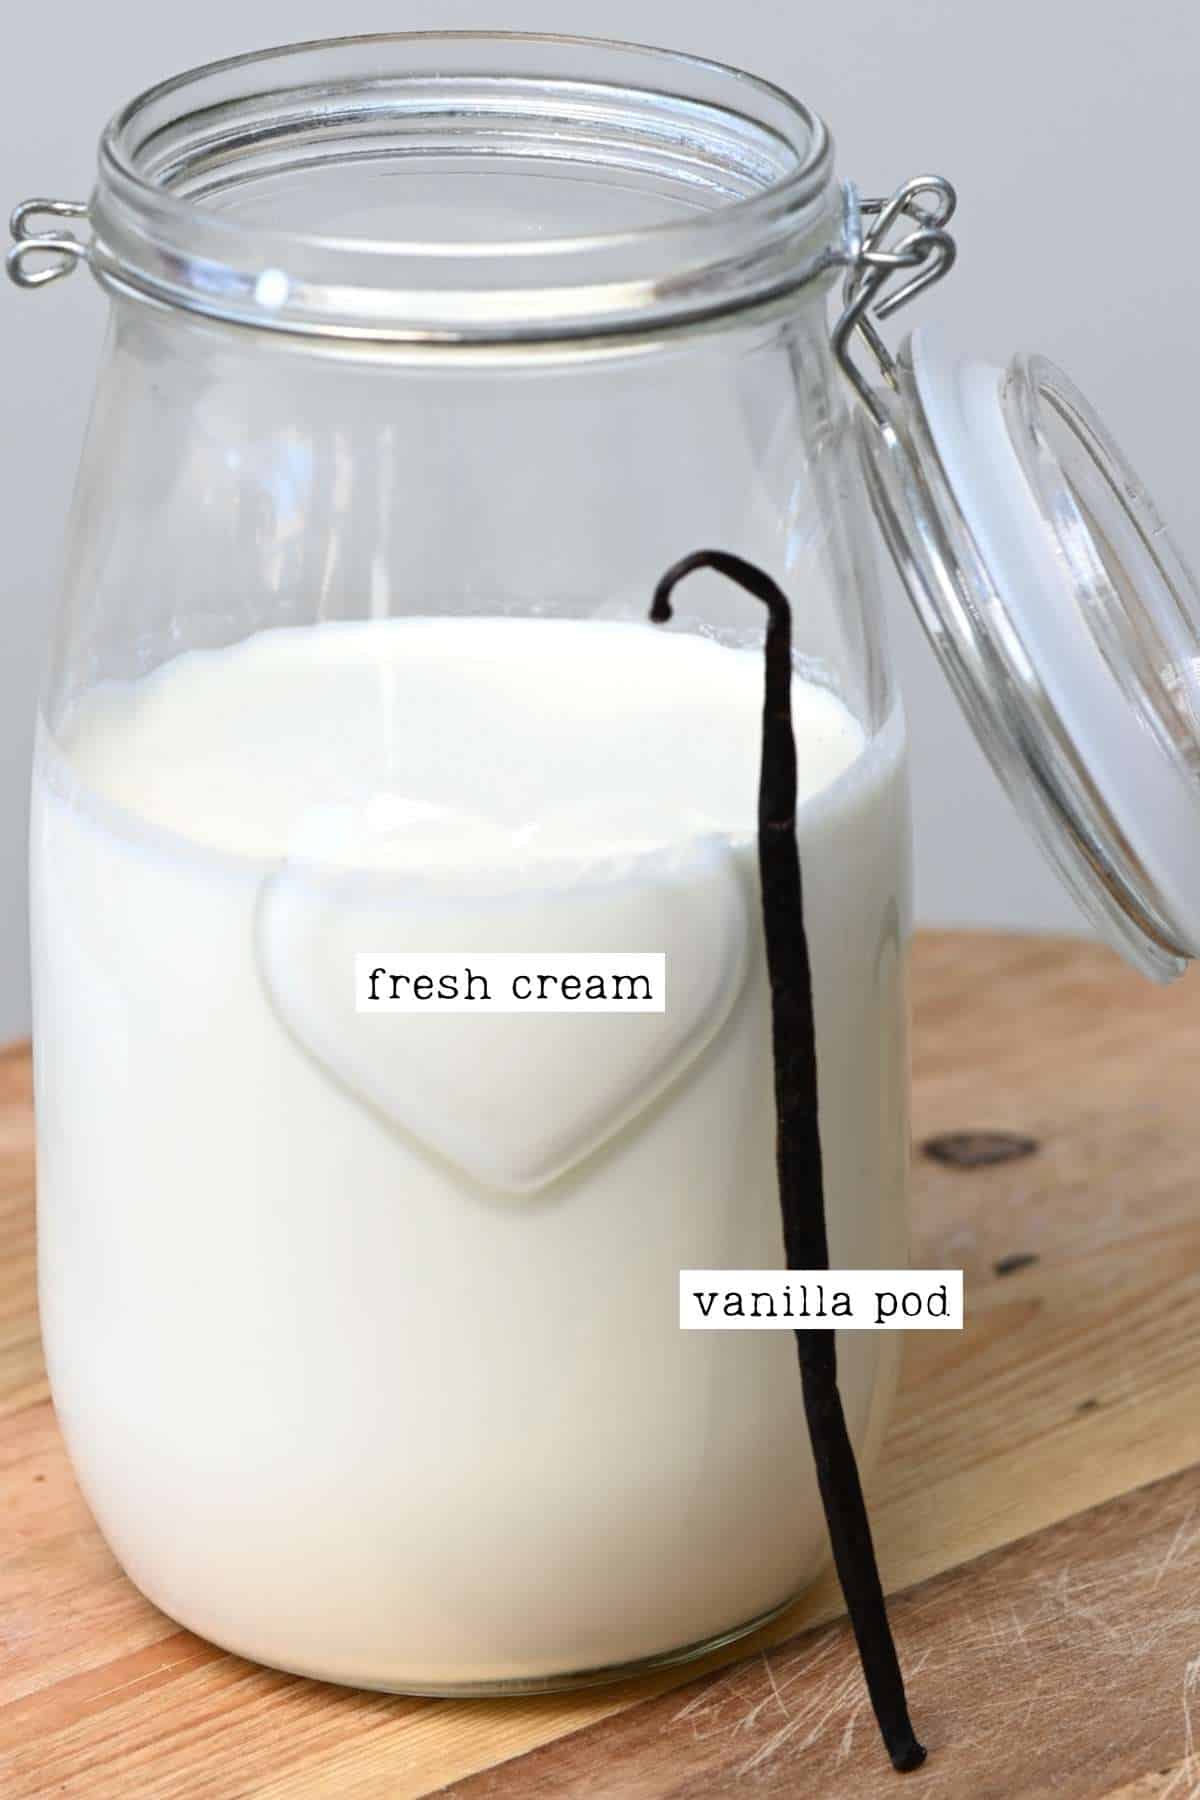 Fresh cream and vanilla pod